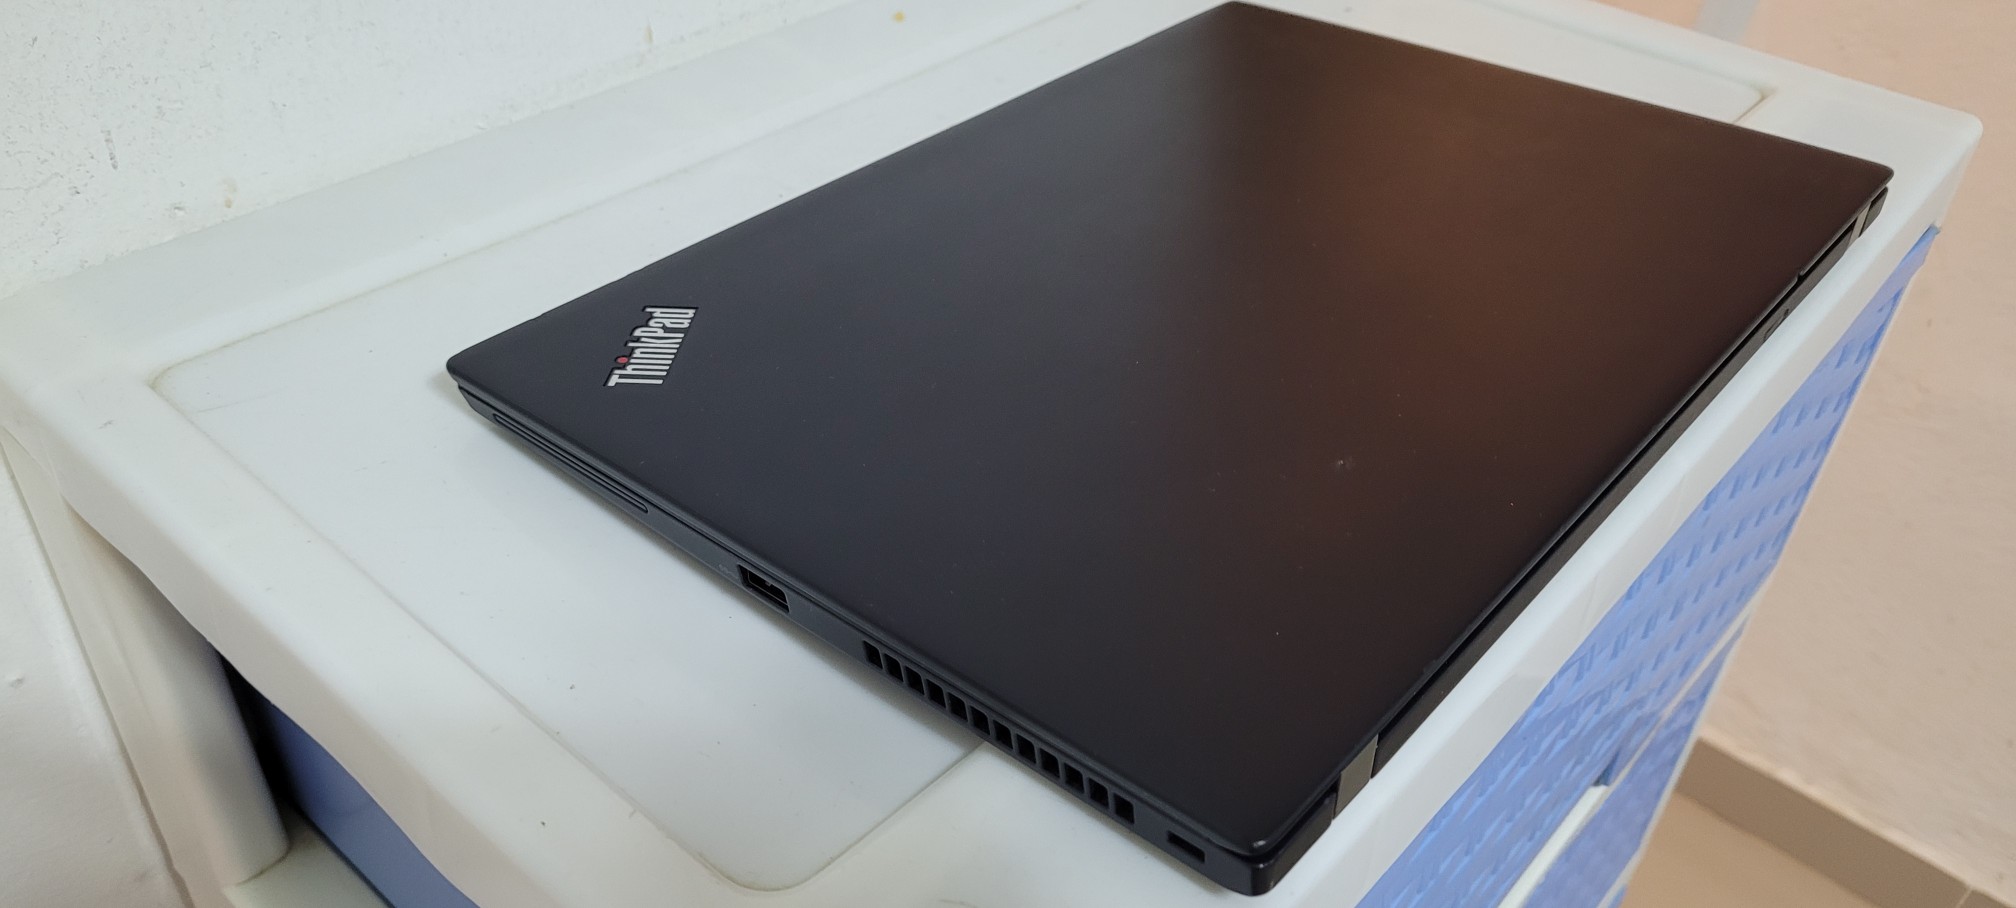 computadoras y laptops - Lenovo Slim t480 14 Pulg Core i5 8va Gen Ram 8gb ddr4 Disco 256gb SSD Video 4gb 2